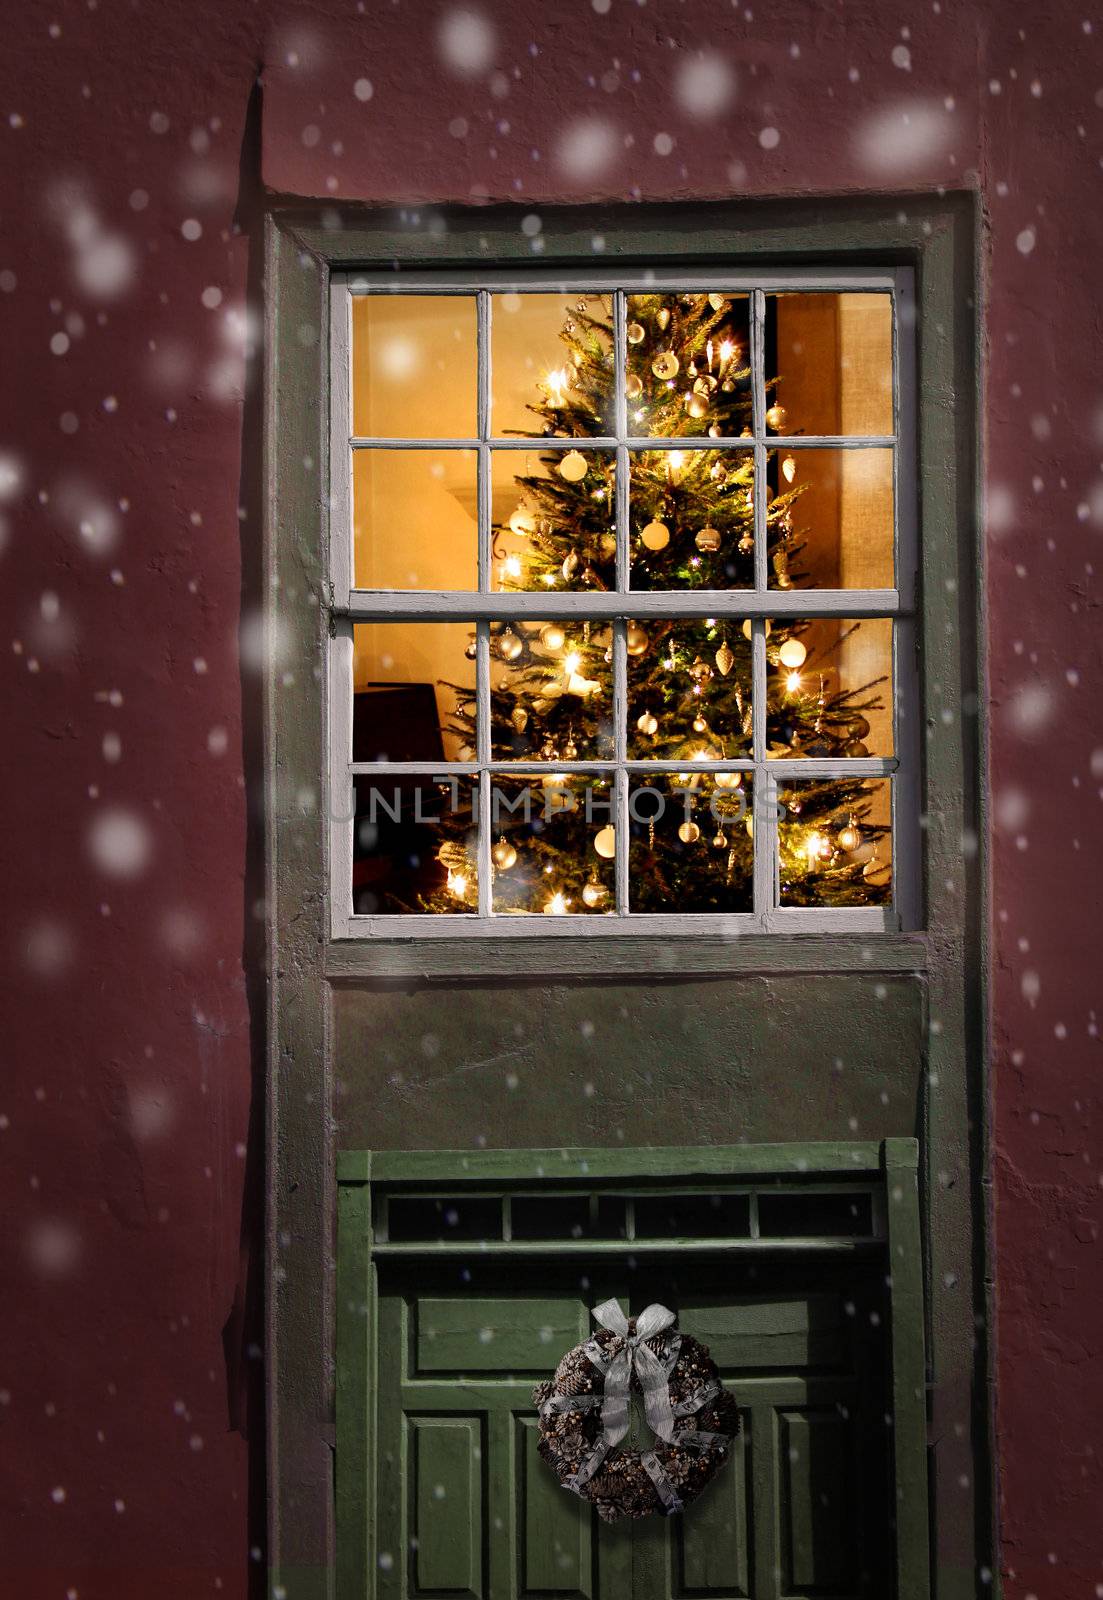 Lit Christmas tree window by anterovium